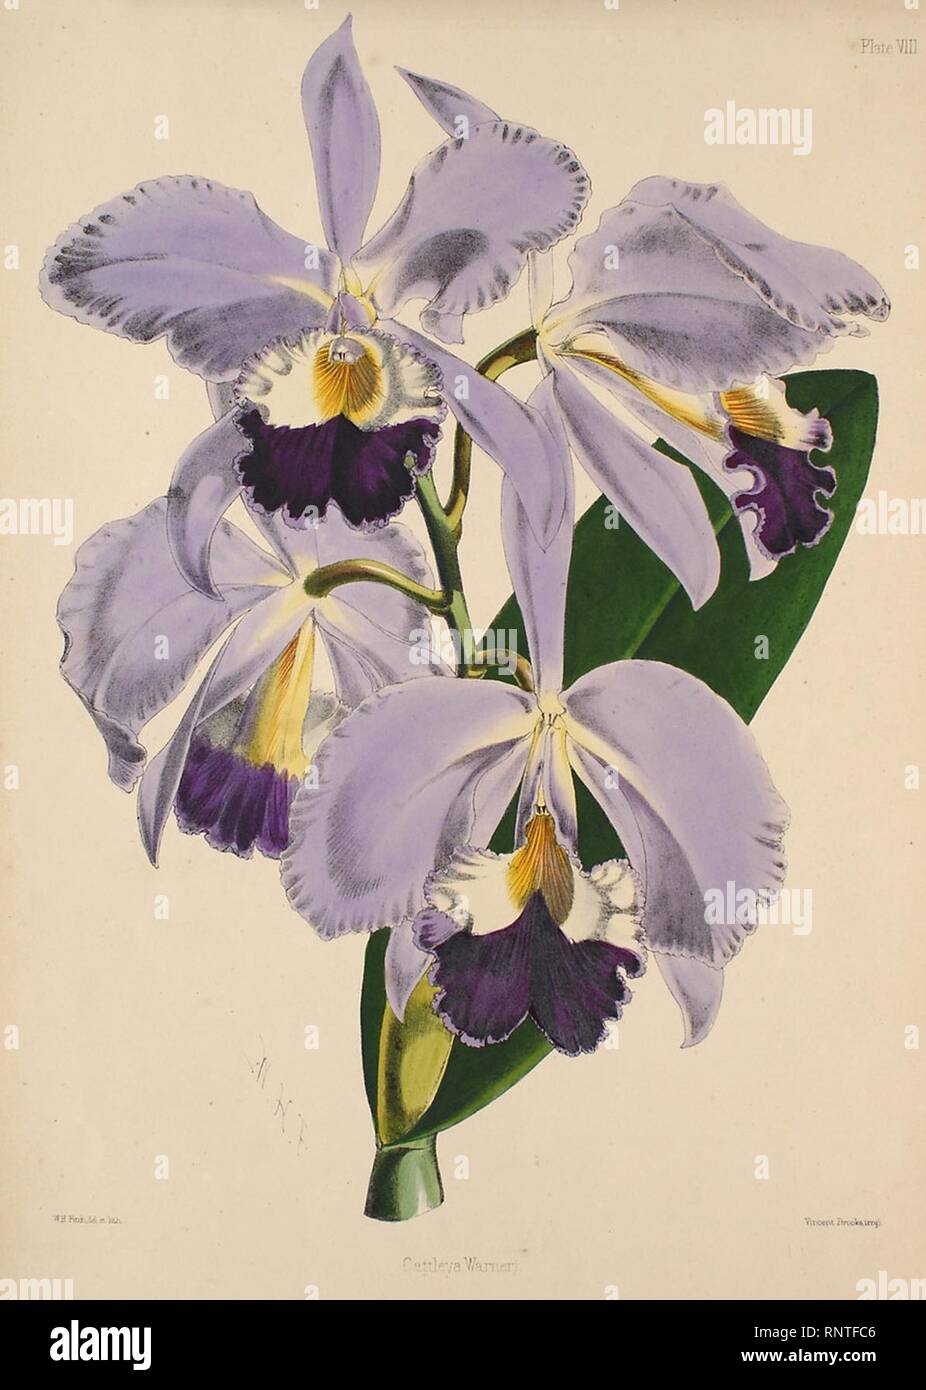 Cattleya warneri - Warner, Williams - Select orch. plants 1, pl. 8 (1862-1865). Stock Photo